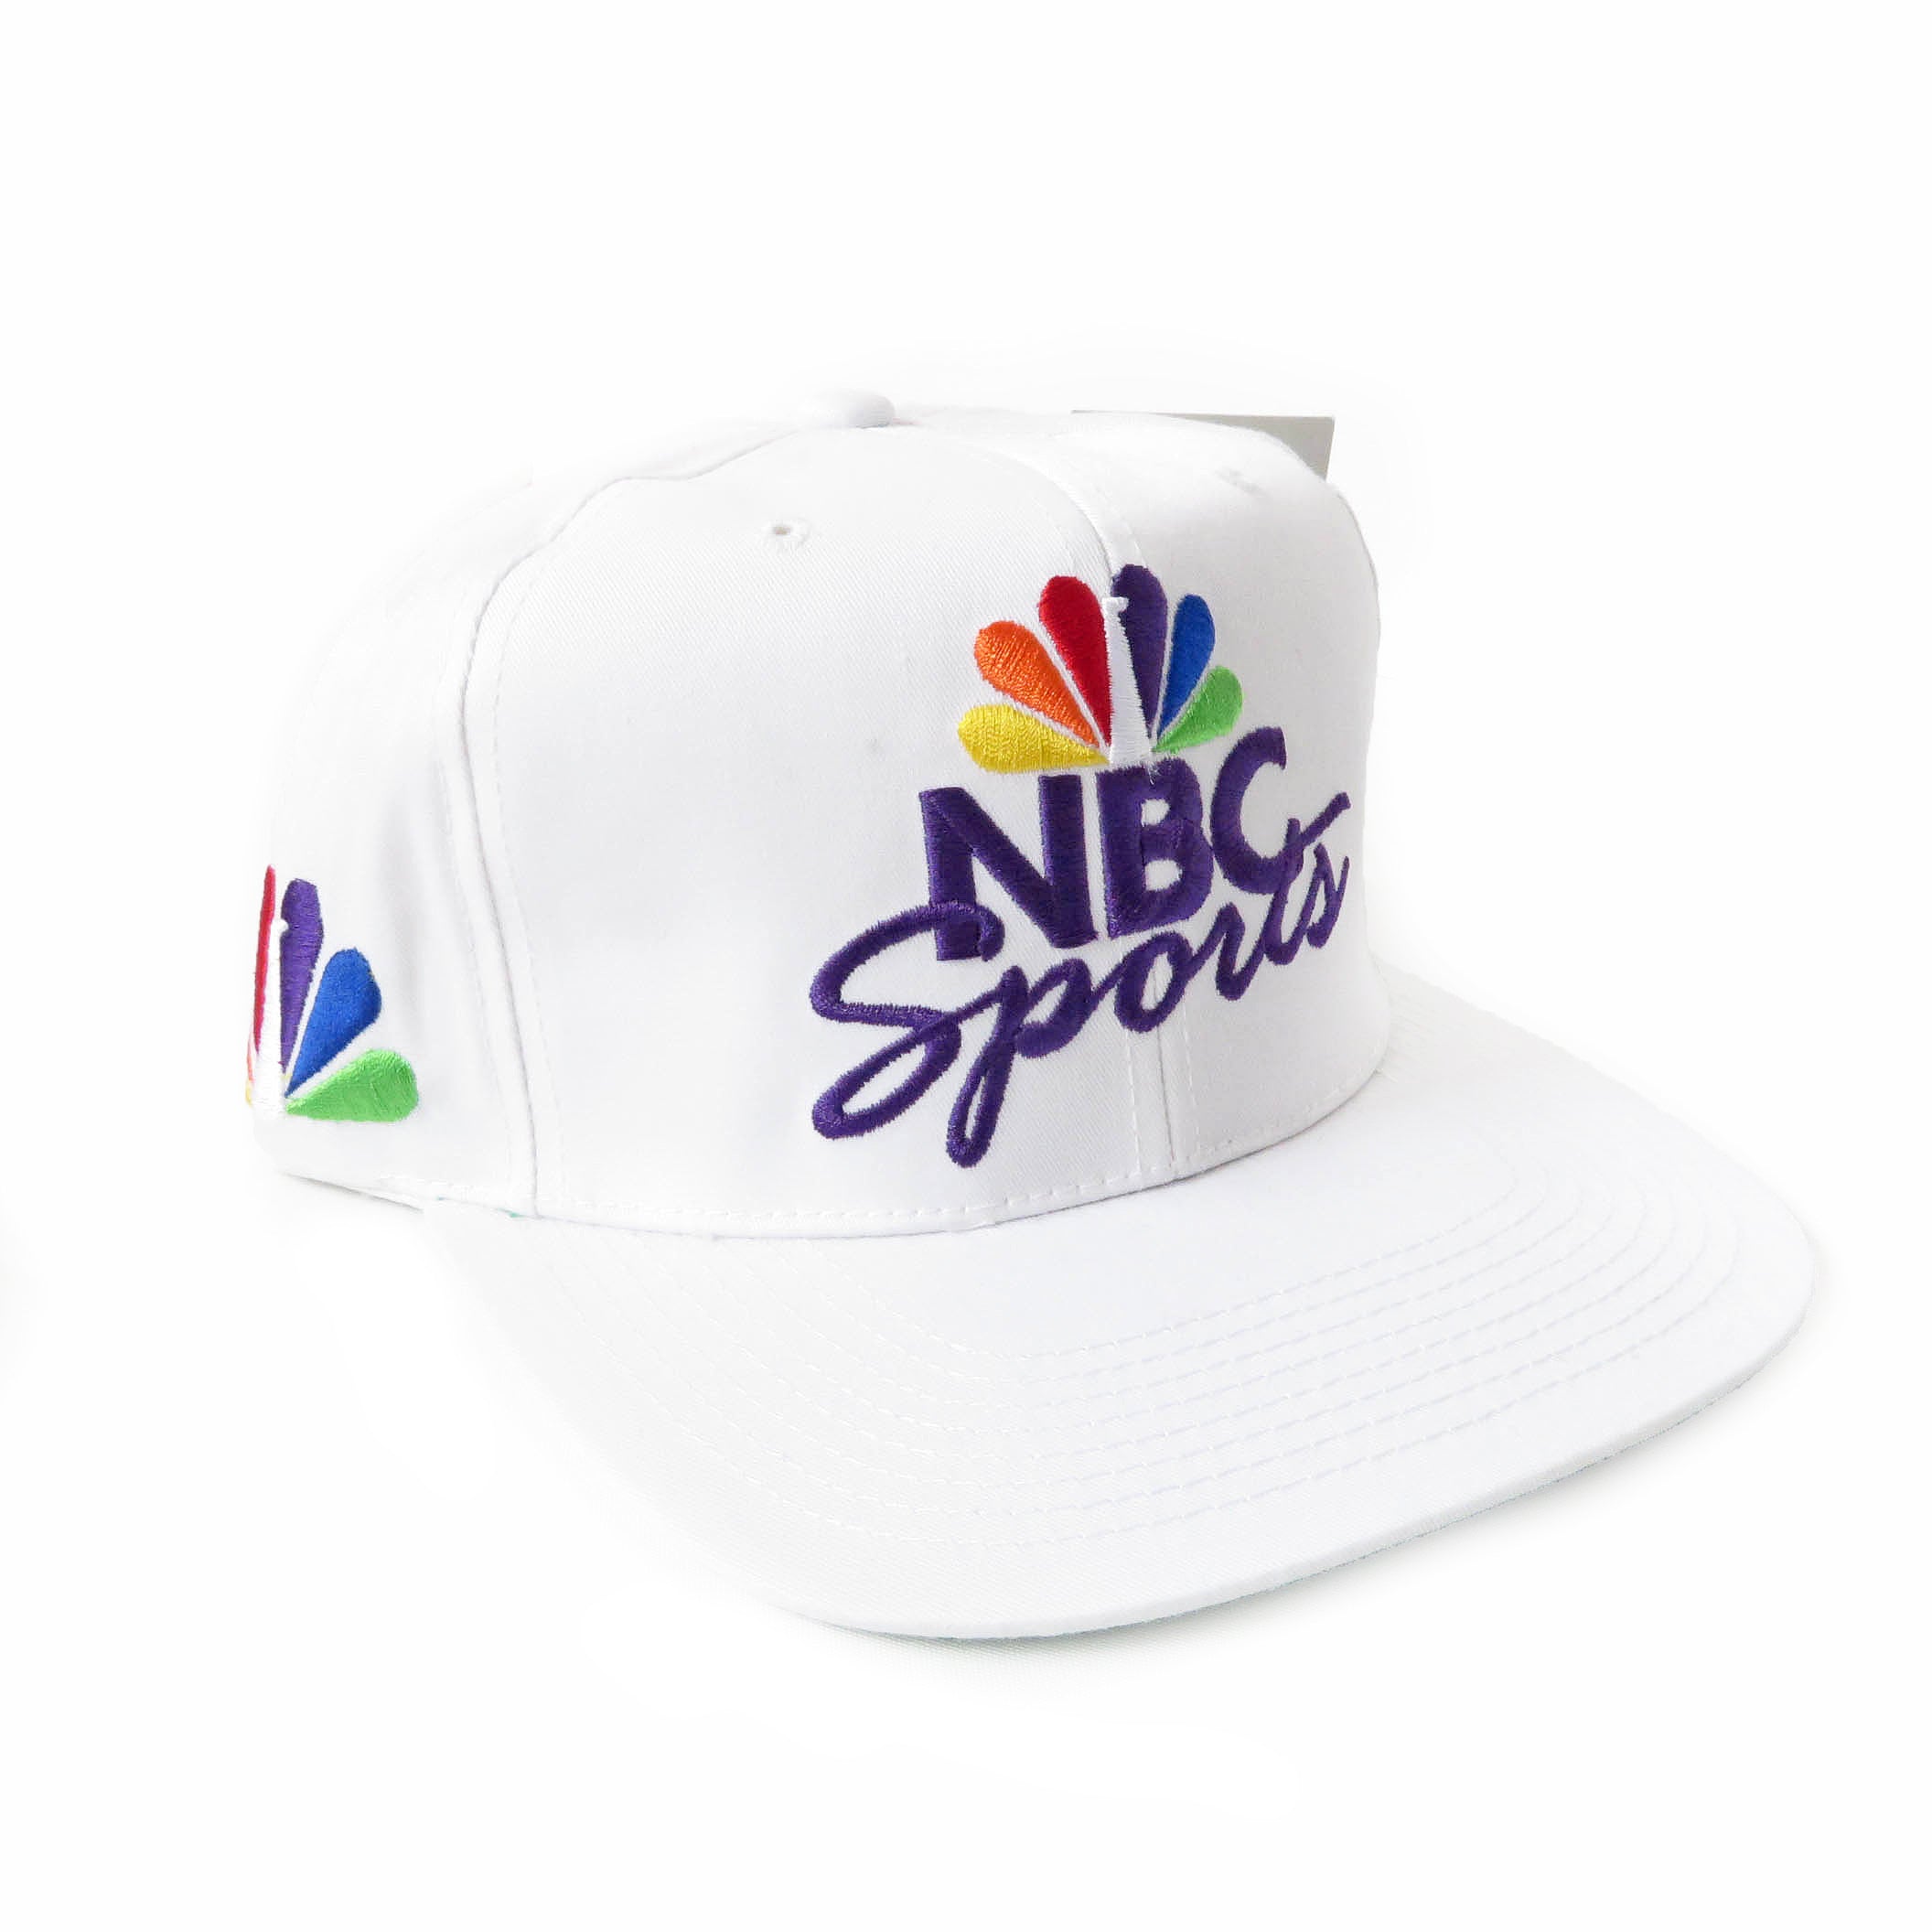 Vintage NBC Sports Snapback Hat